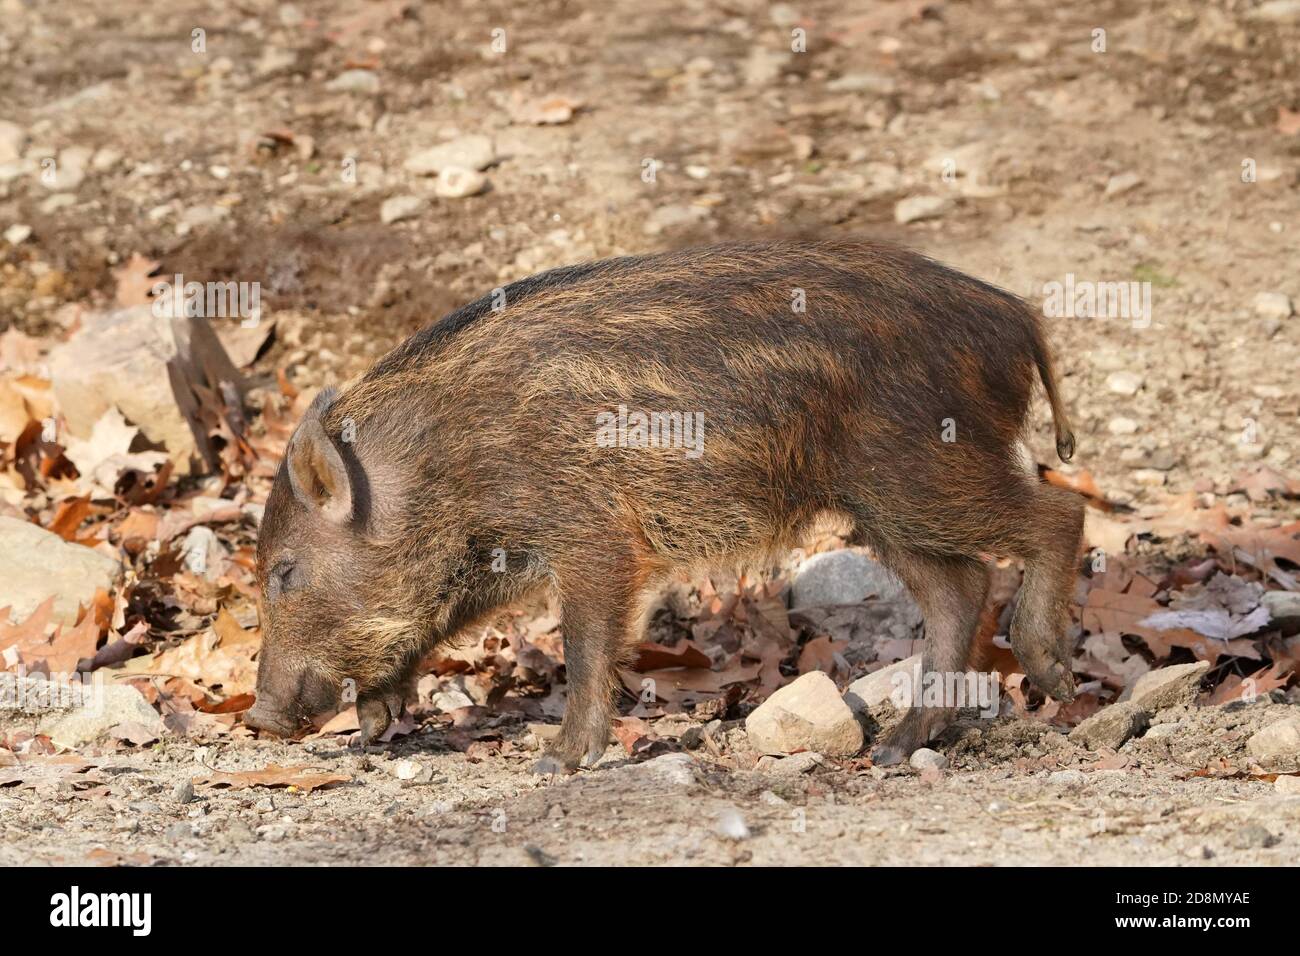 Pigs mating -Fotos und -Bildmaterial in hoher Auflösung – Alamy